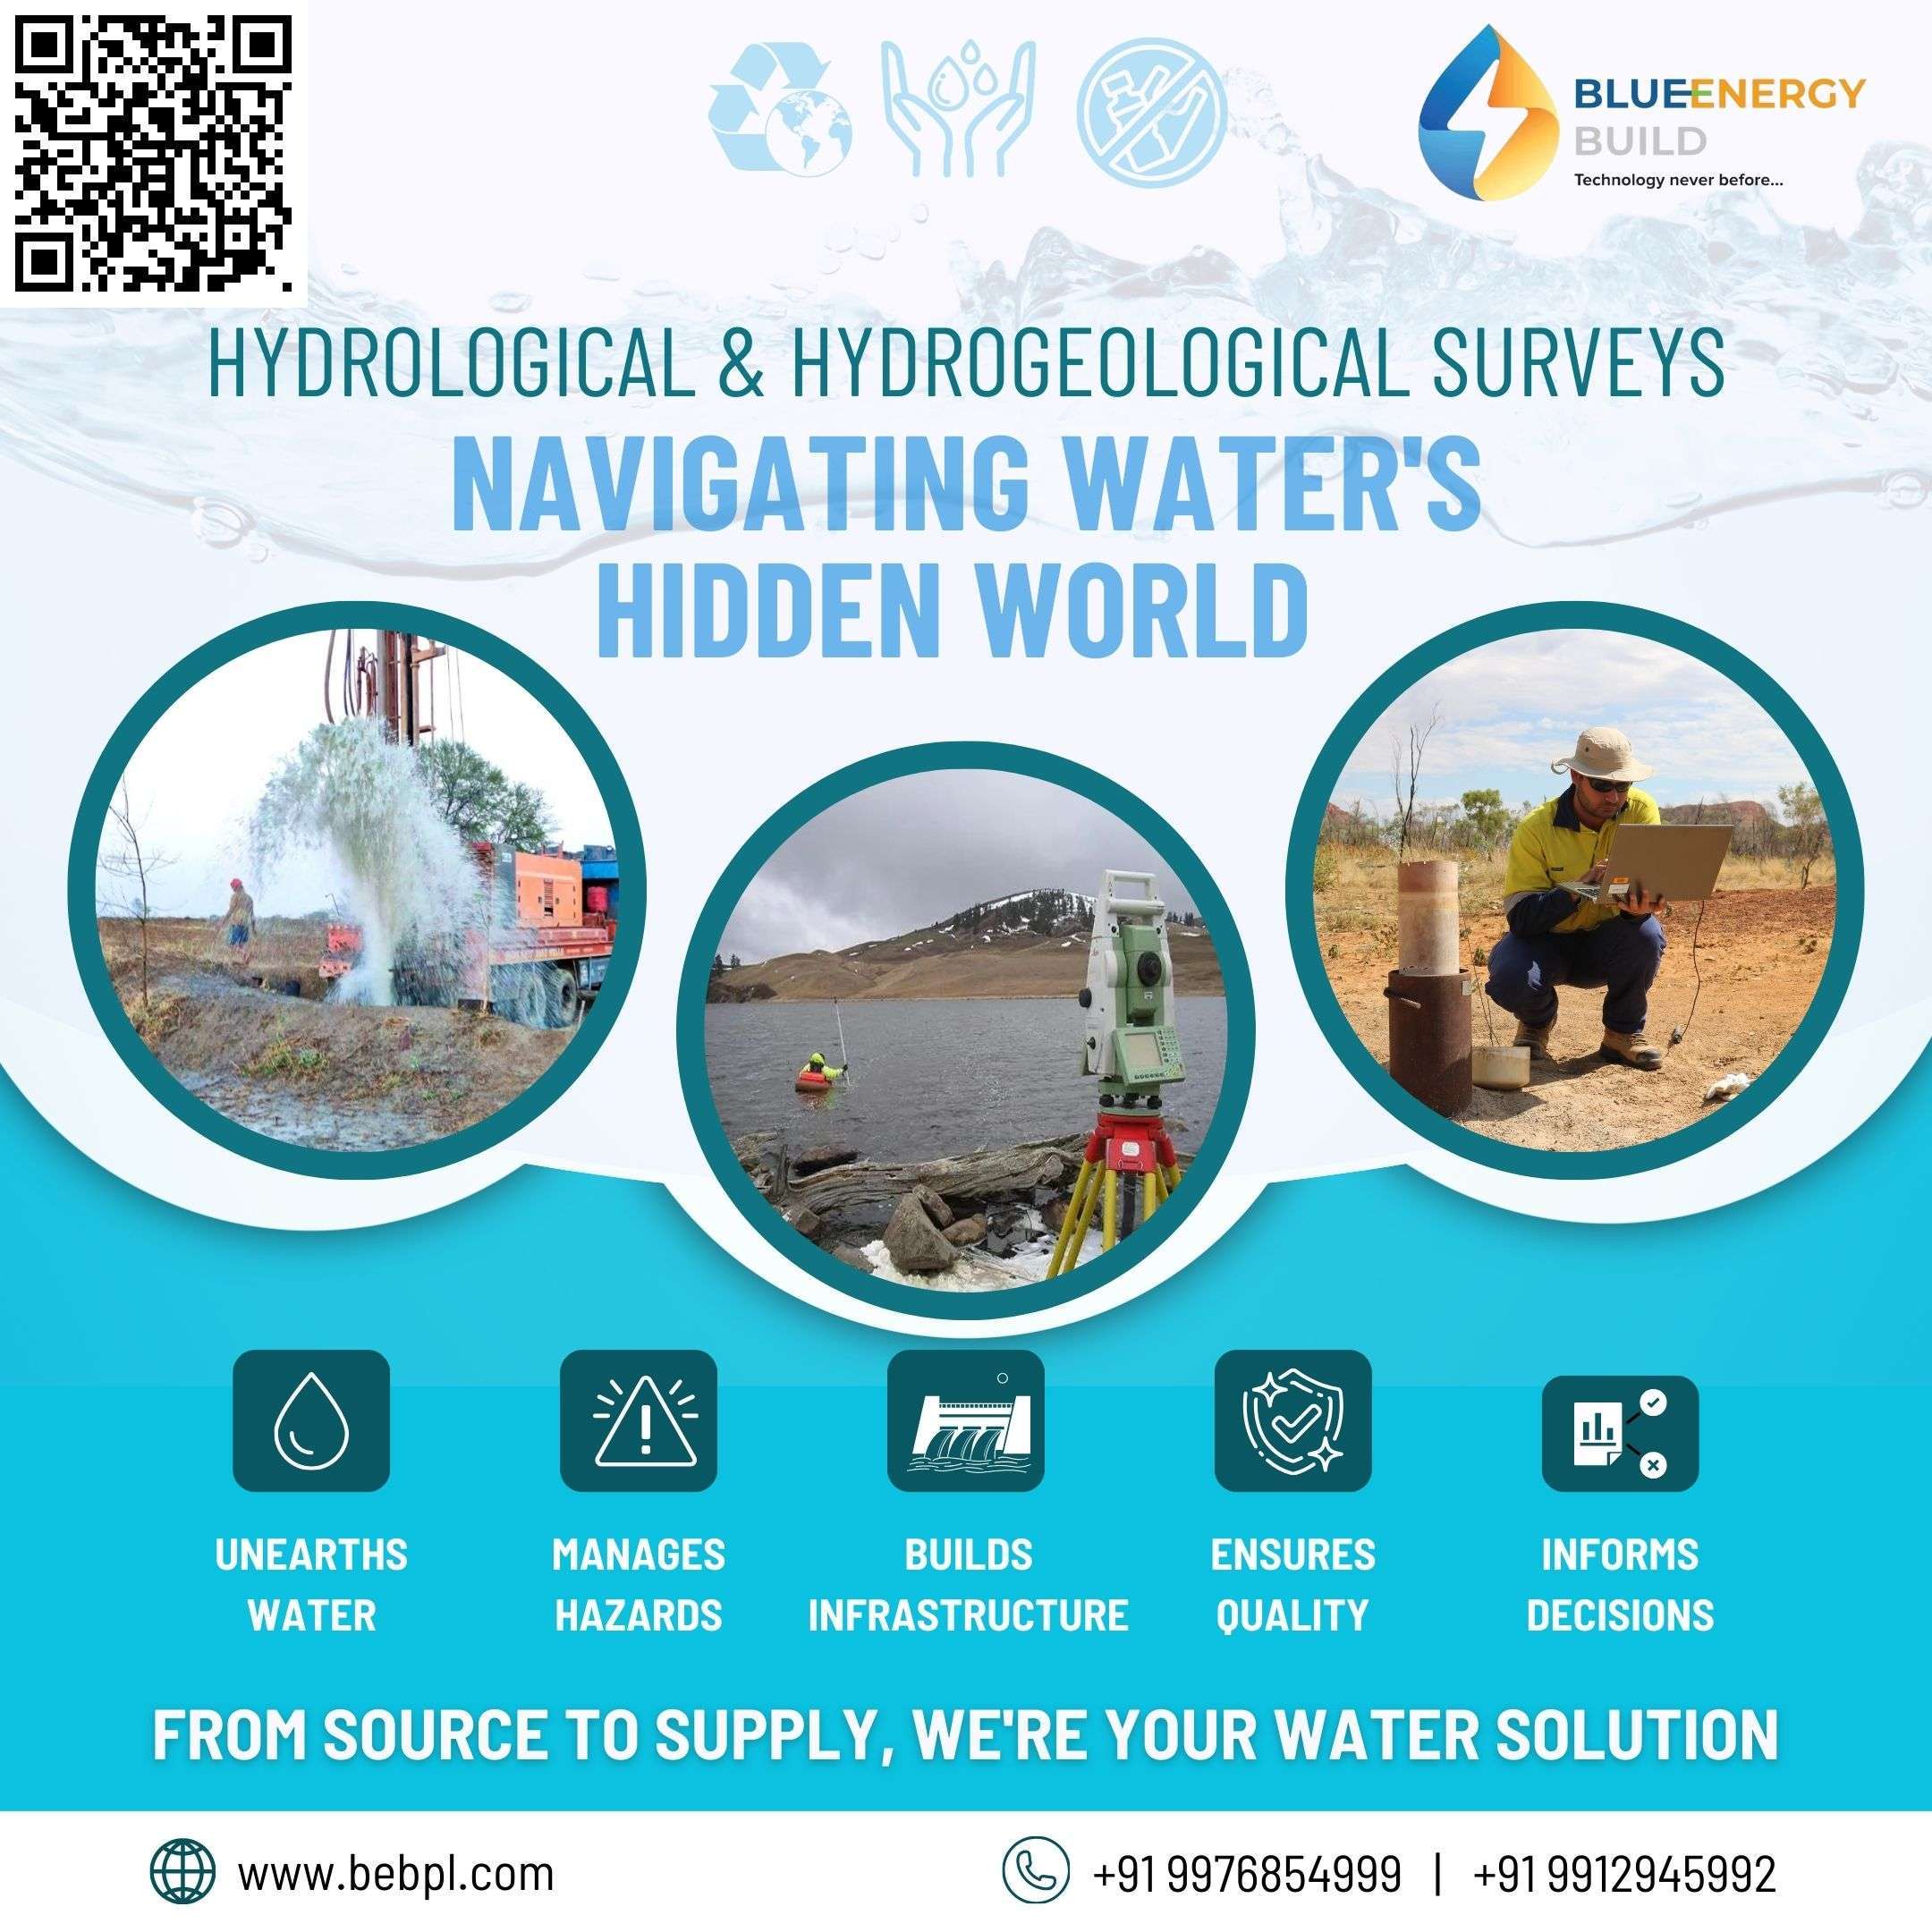 BlueEnergy Build Hydrological & Hydrogeological Surveys